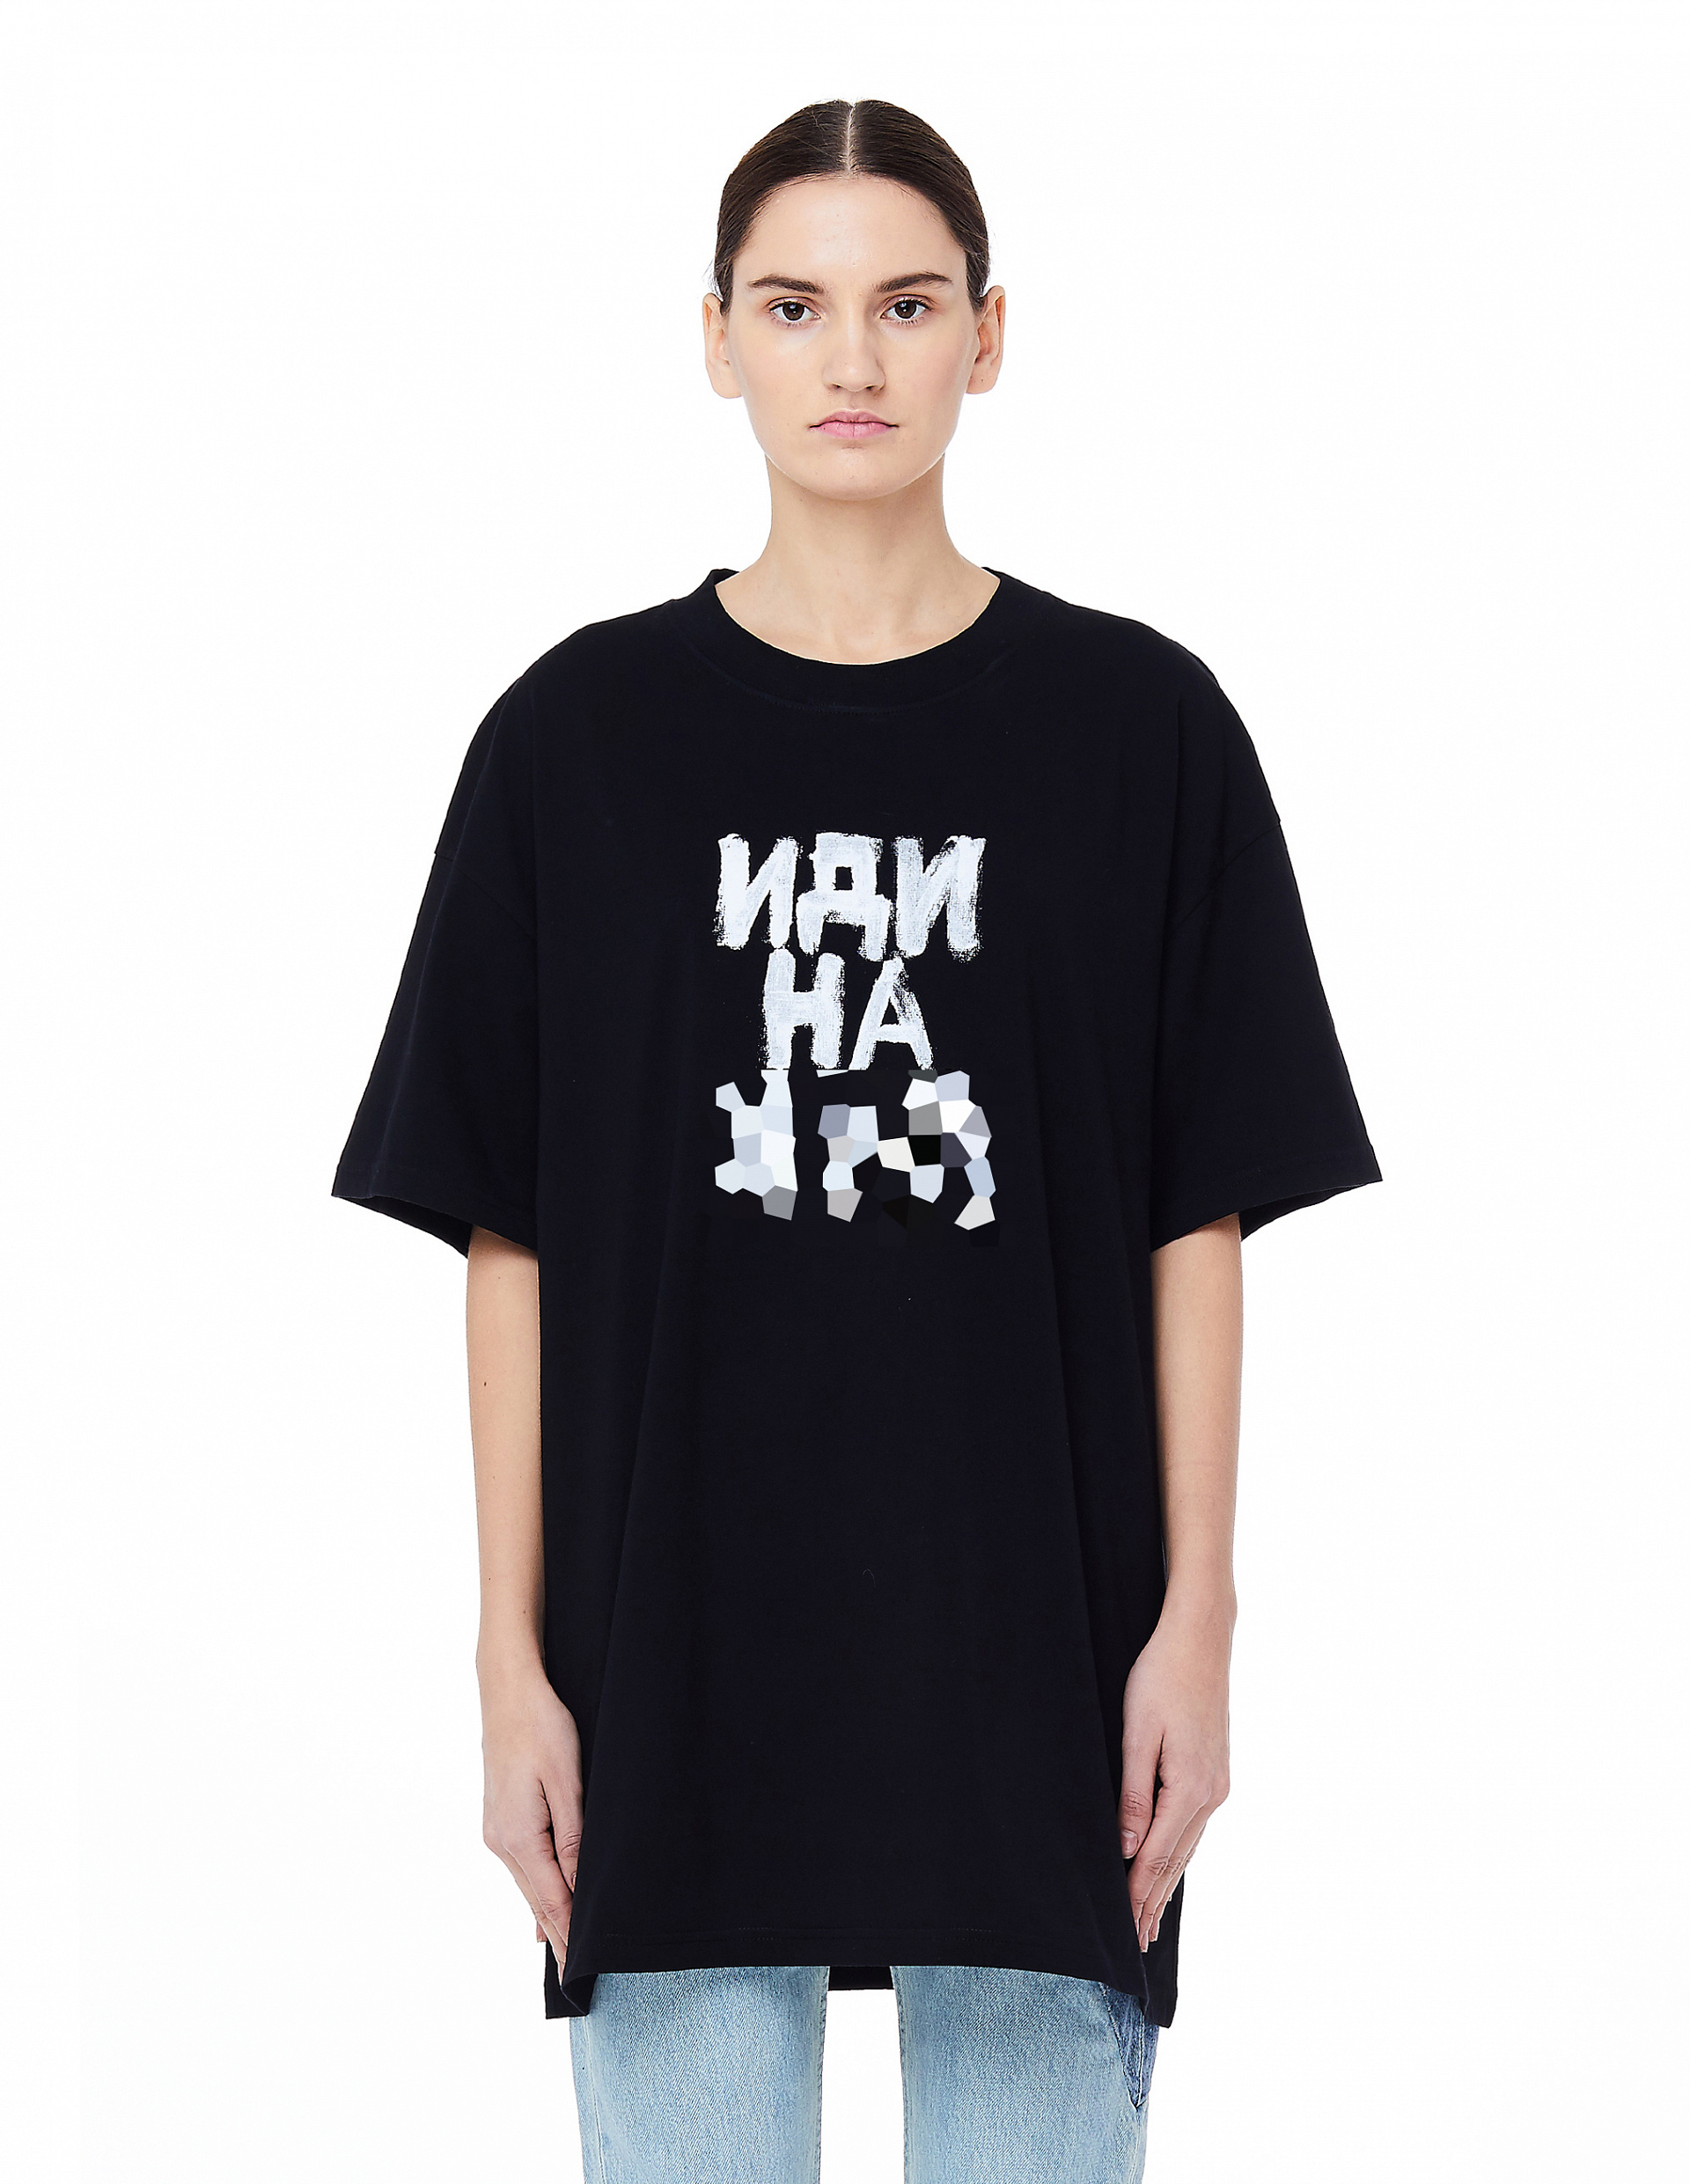 Buy Vetements women black printed t-shirt for $450 online on SVMOSCOW